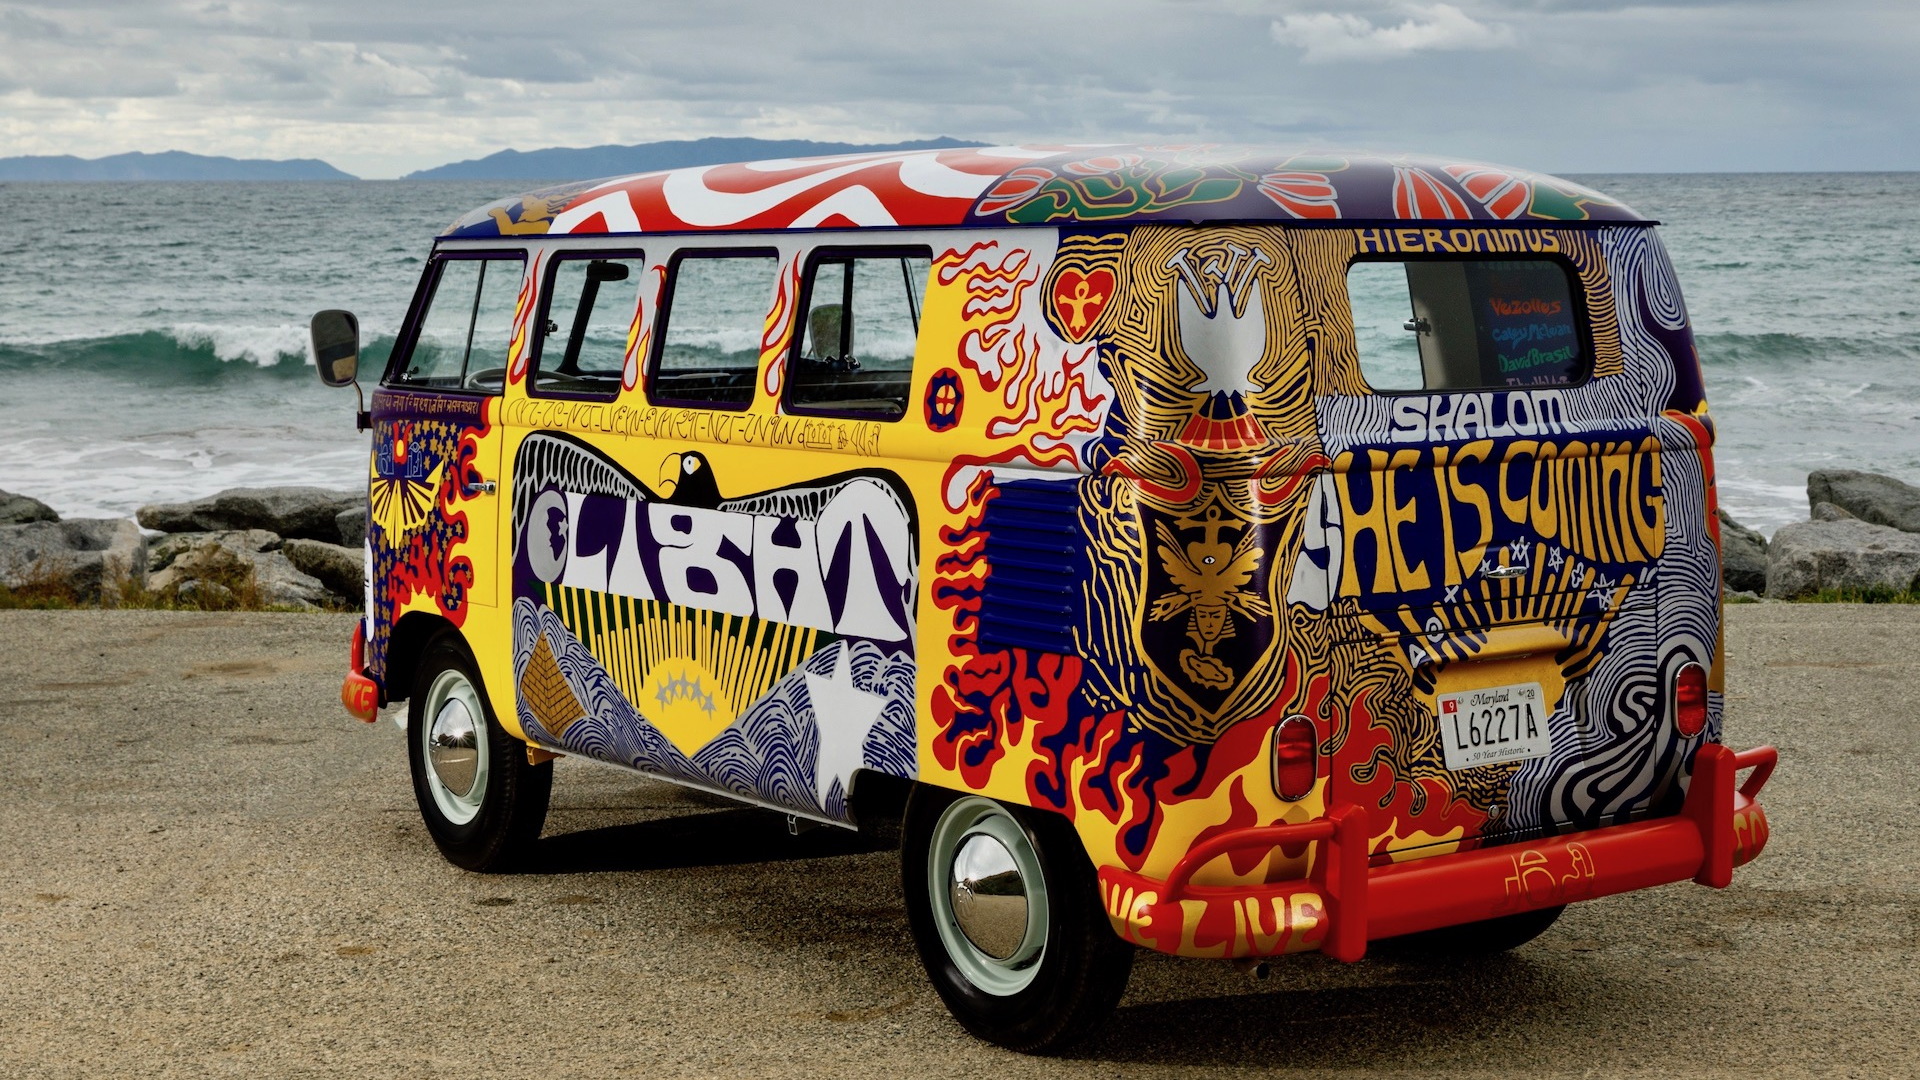 Iconic ‘Light’ VW bus of Woodstock fame